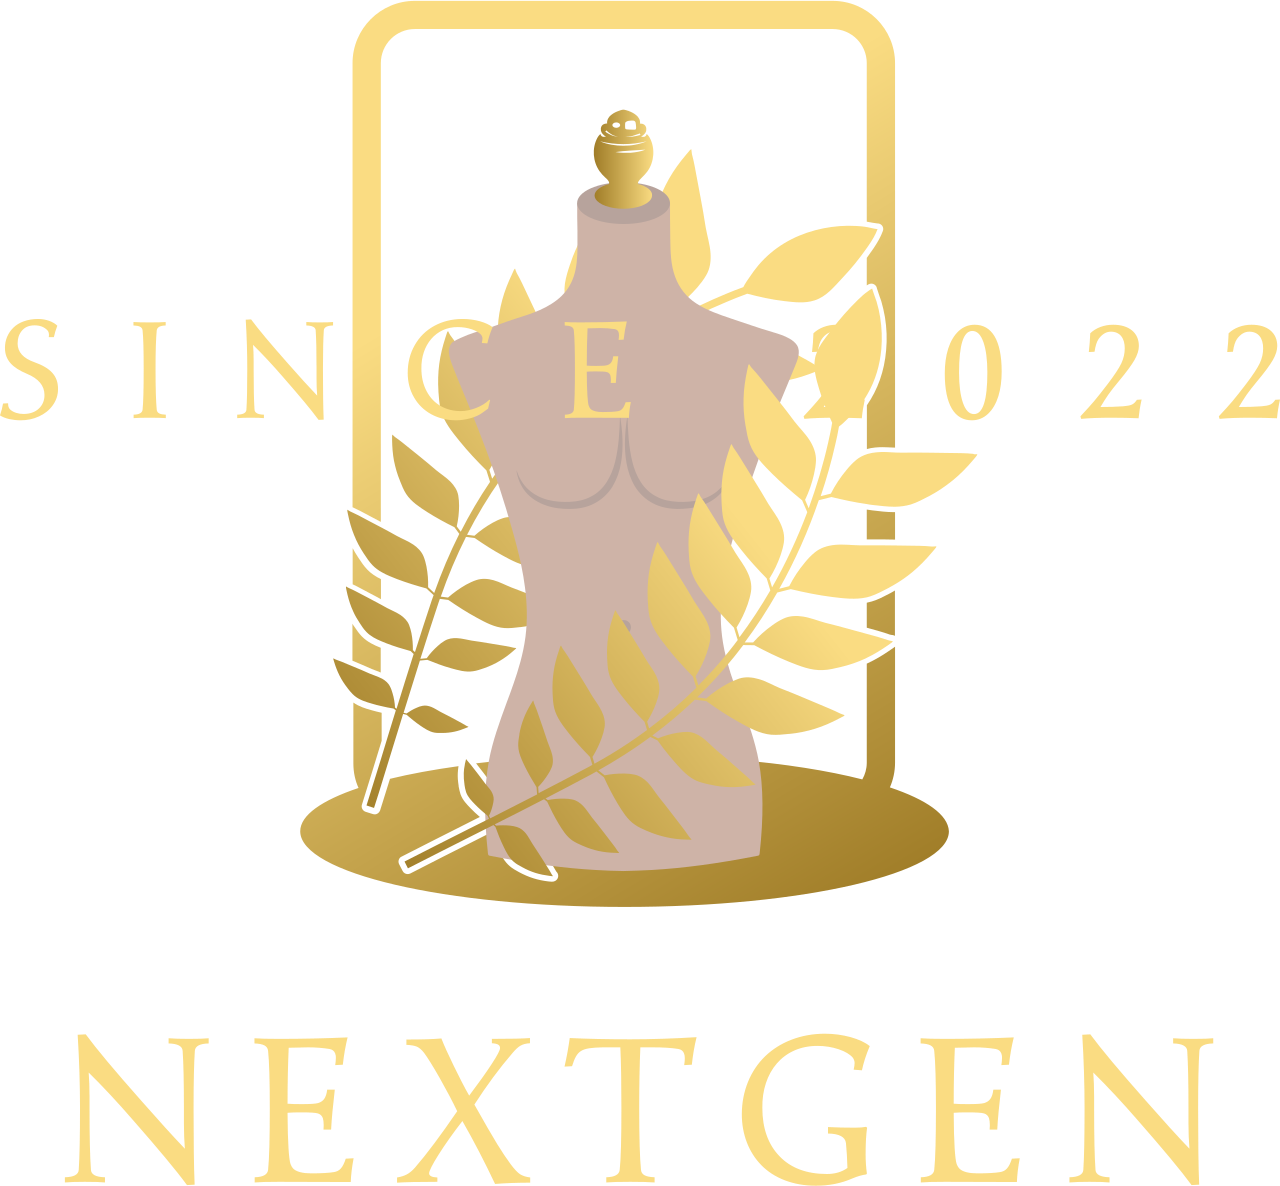 Nextgen's logo